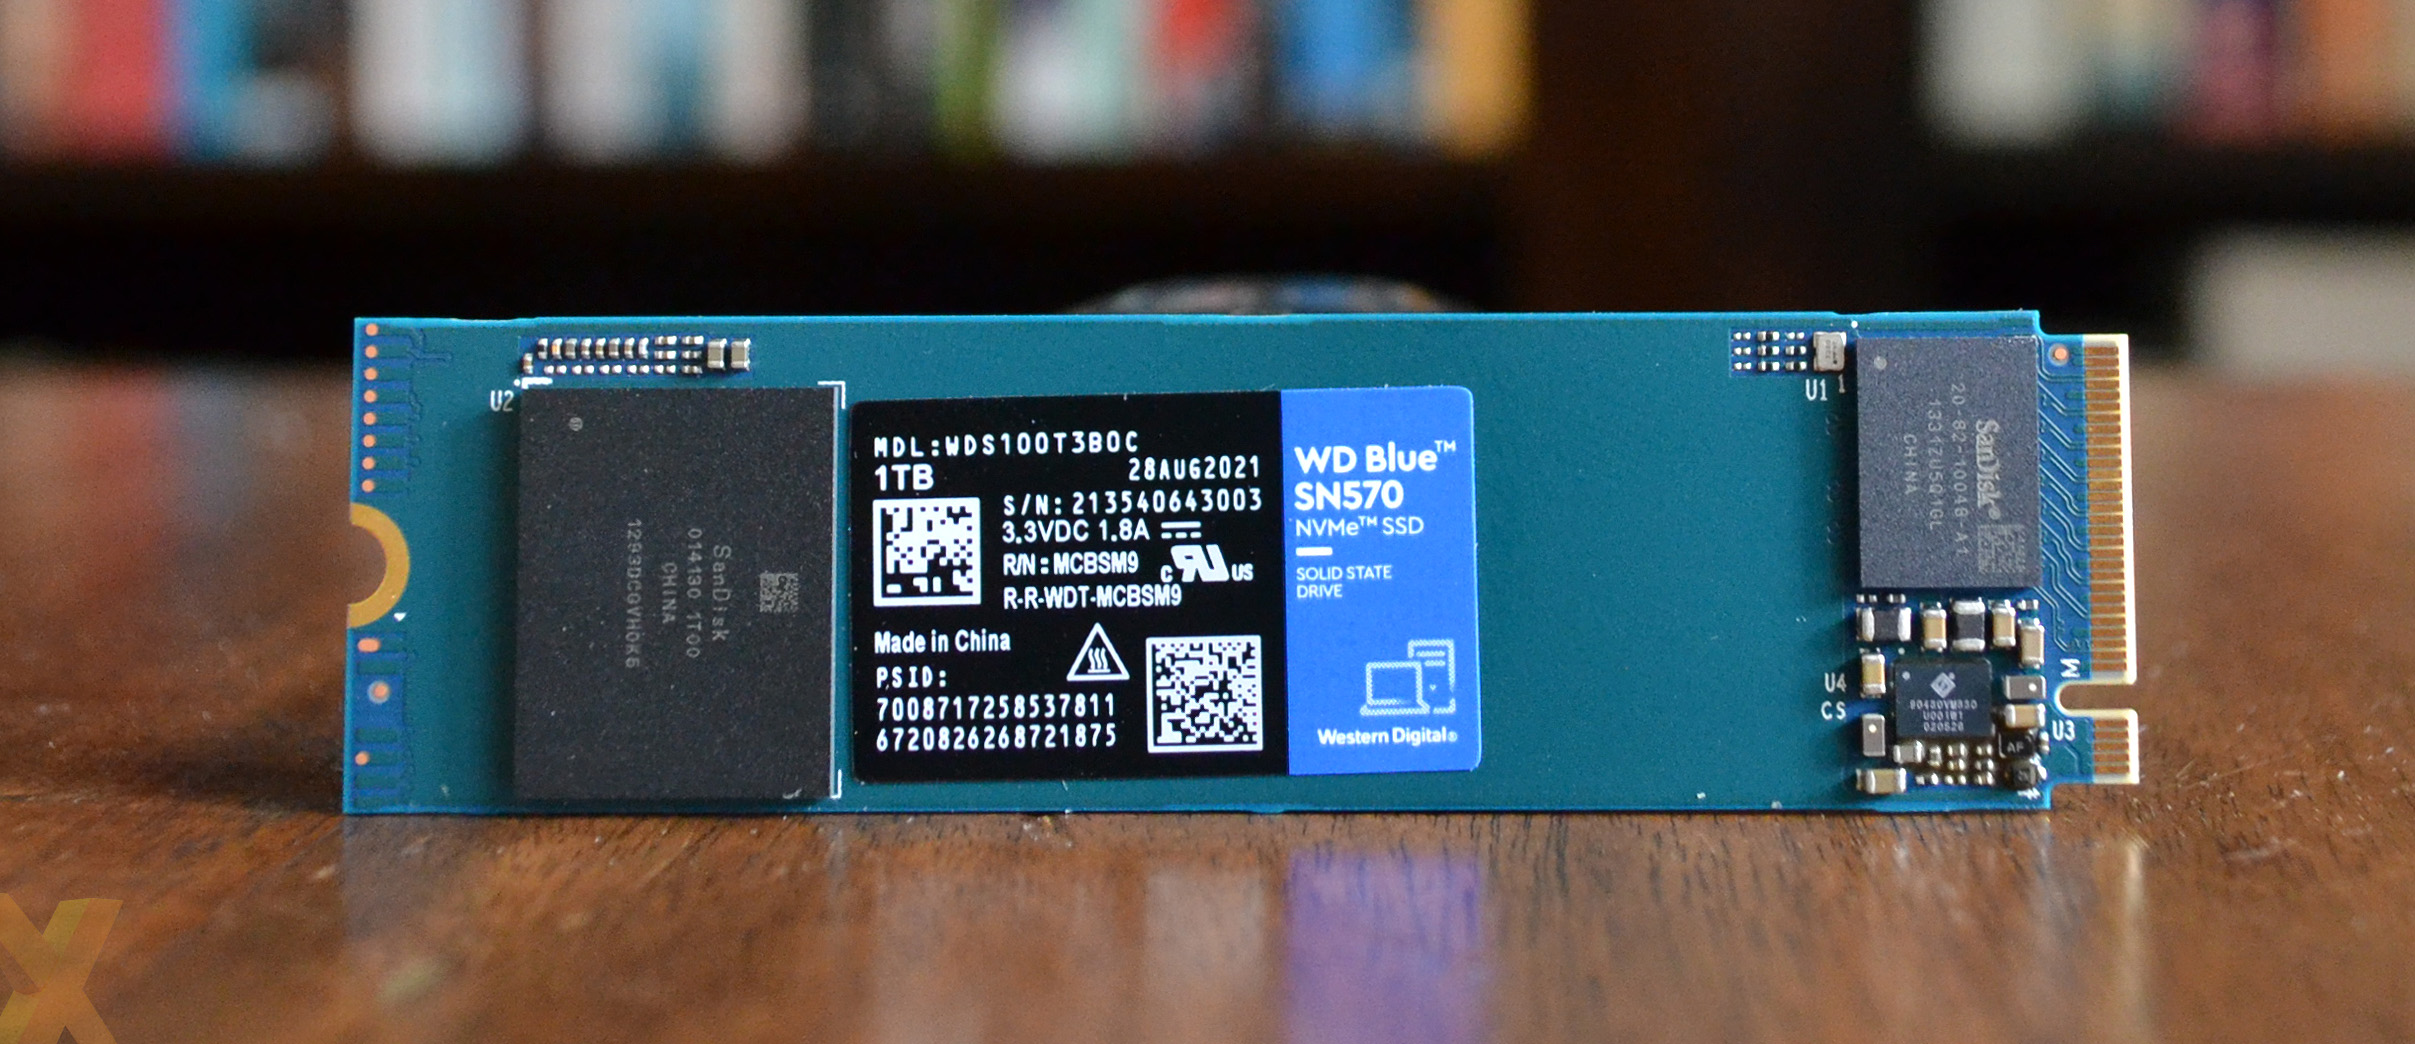 Review: WD Blue SN570 SSD (1TB) - Storage - HEXUS.net